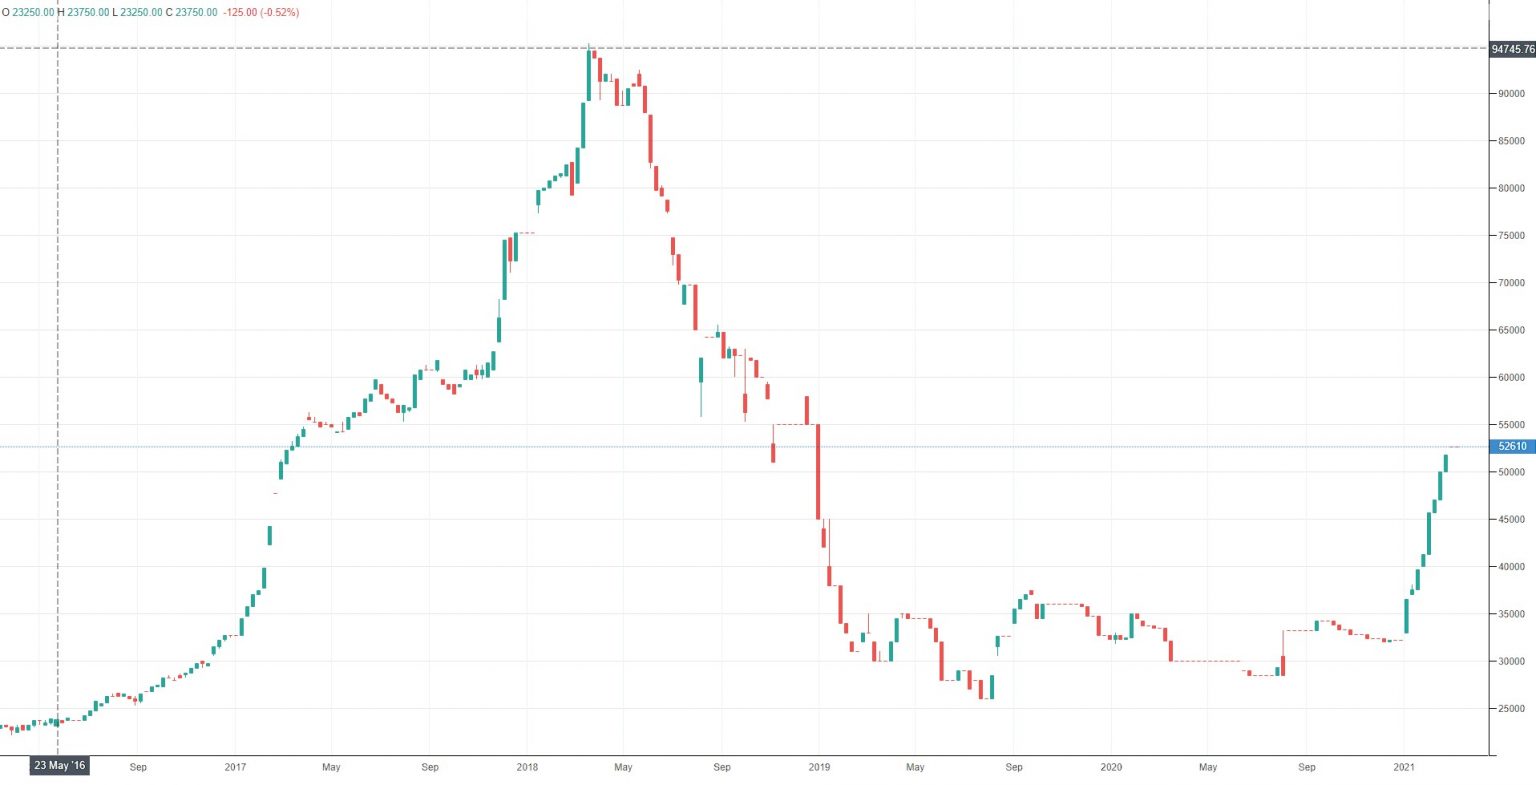 Cobalt Historical Price Charts Cobalt Price History FX Leaders